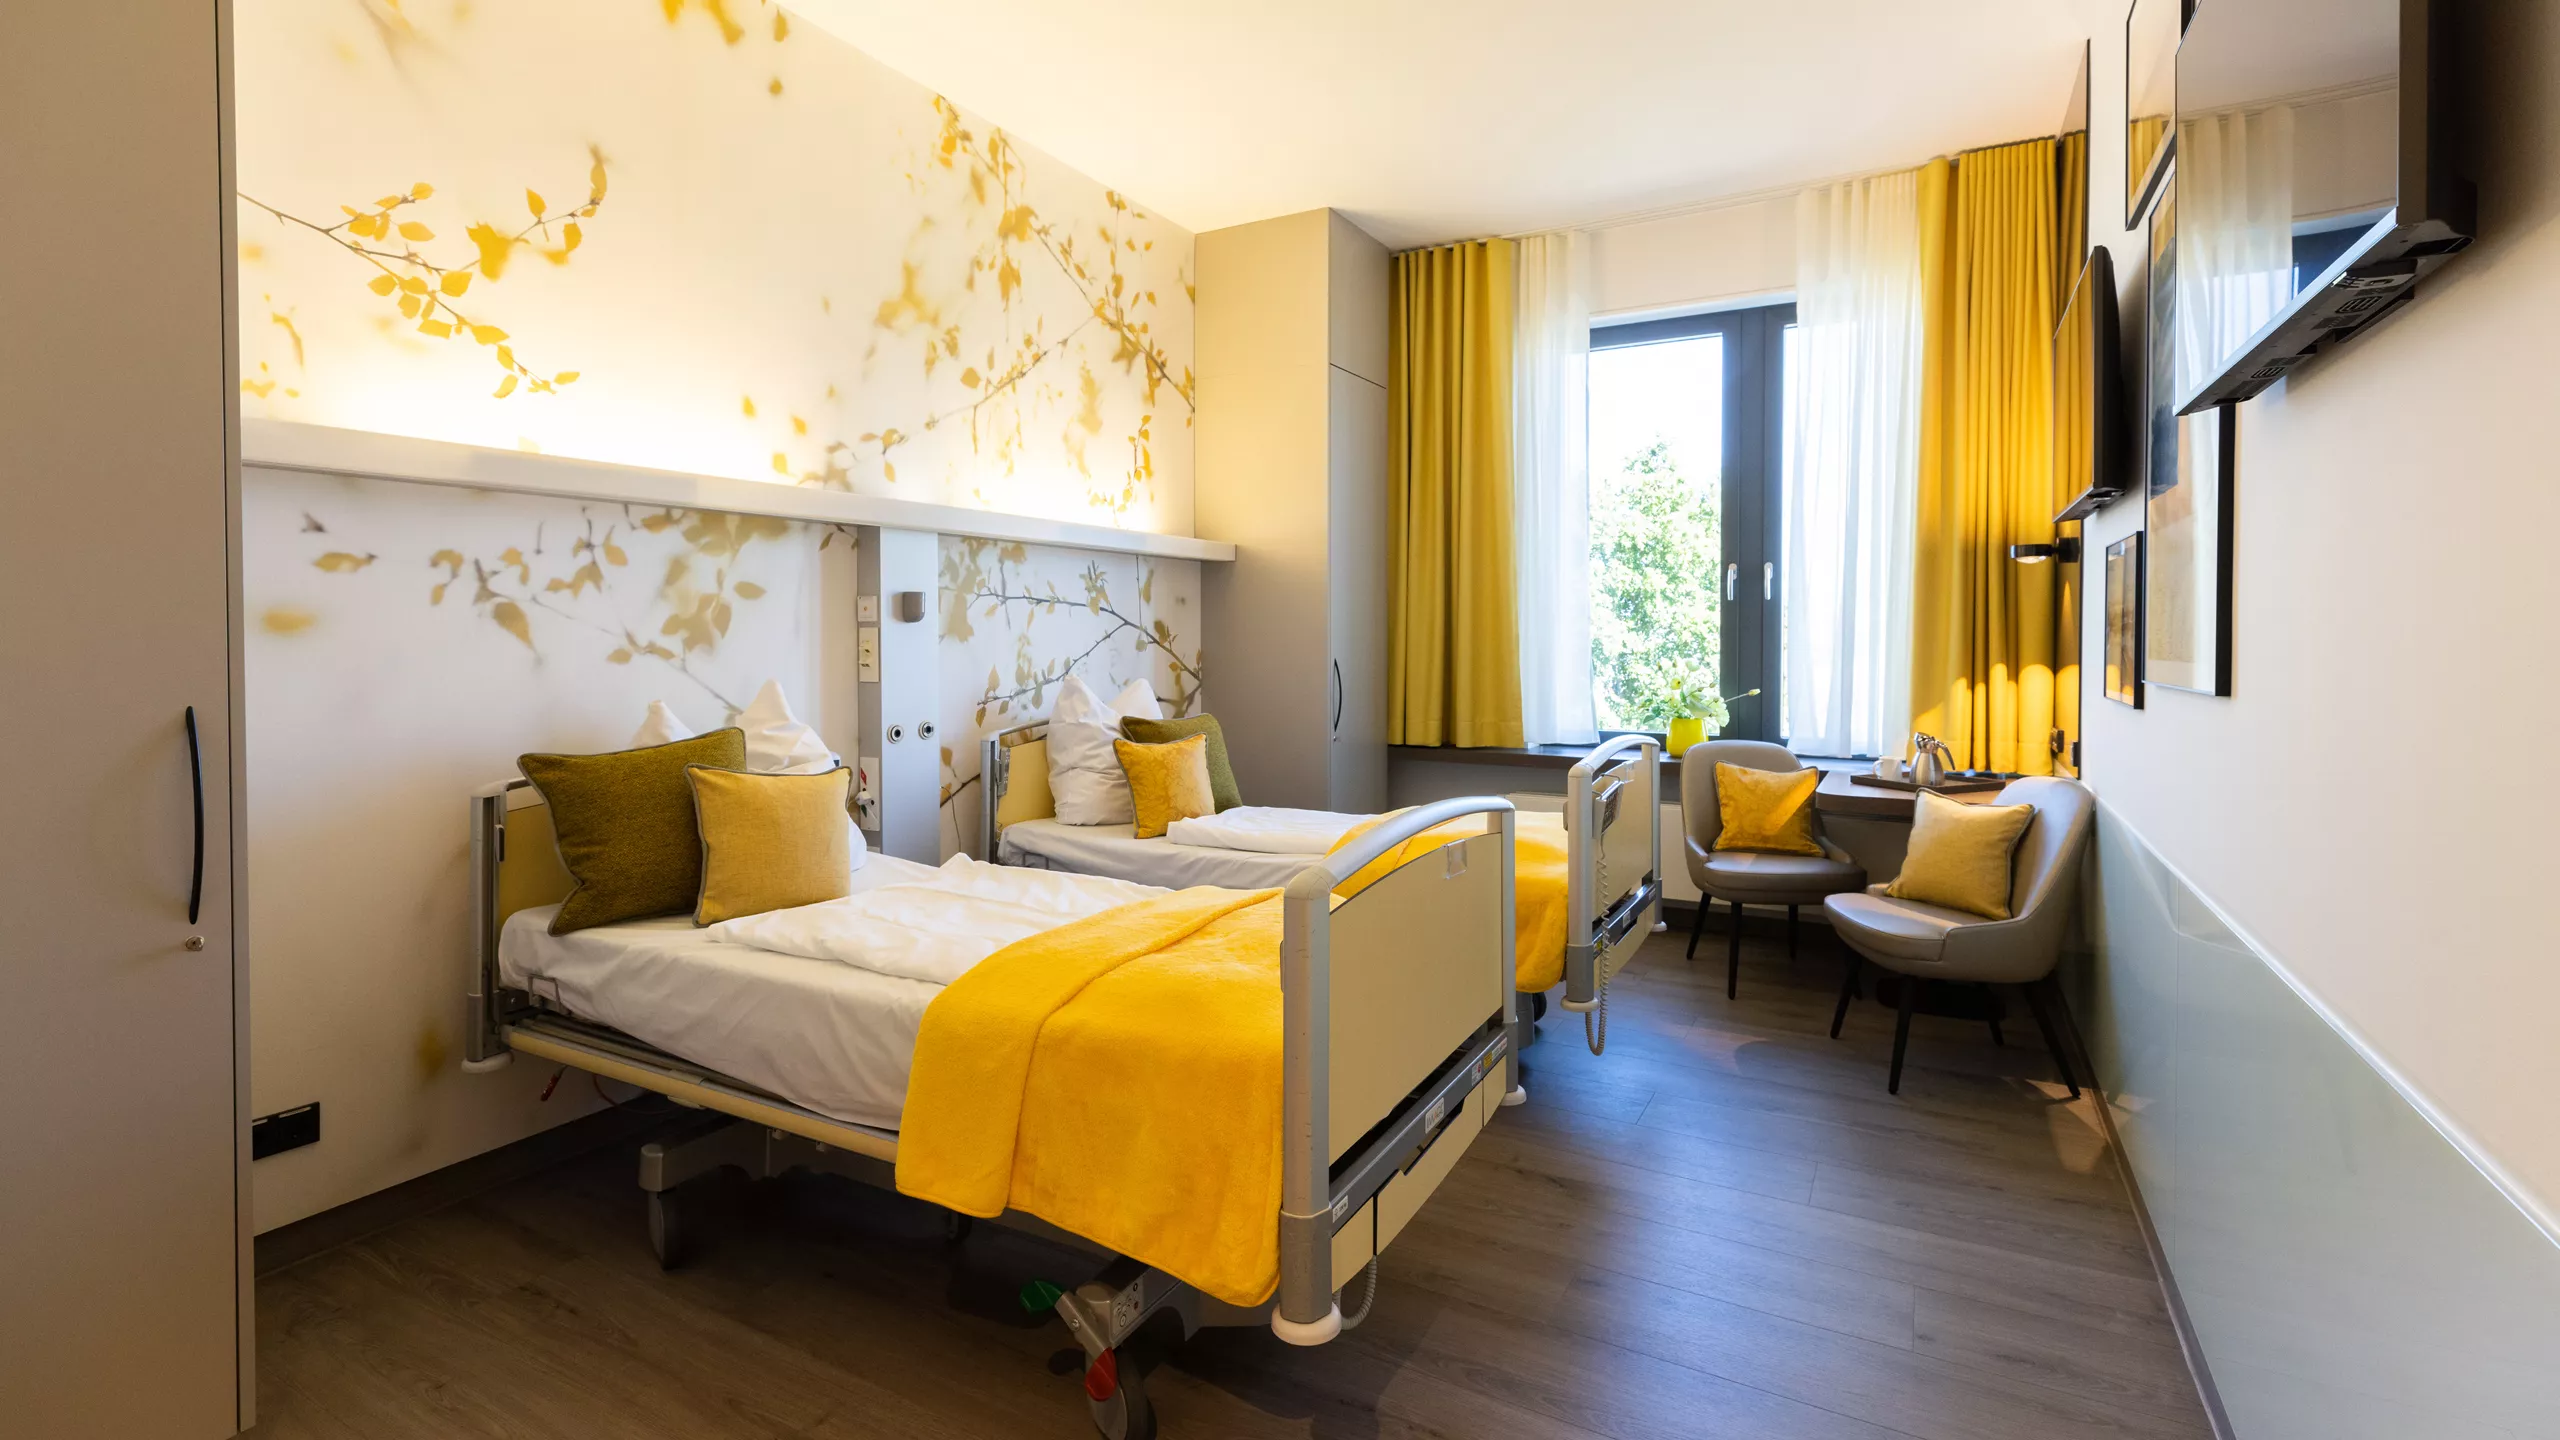 Komfortzimmer am Universitätsklinikum Leipzig – Health Care